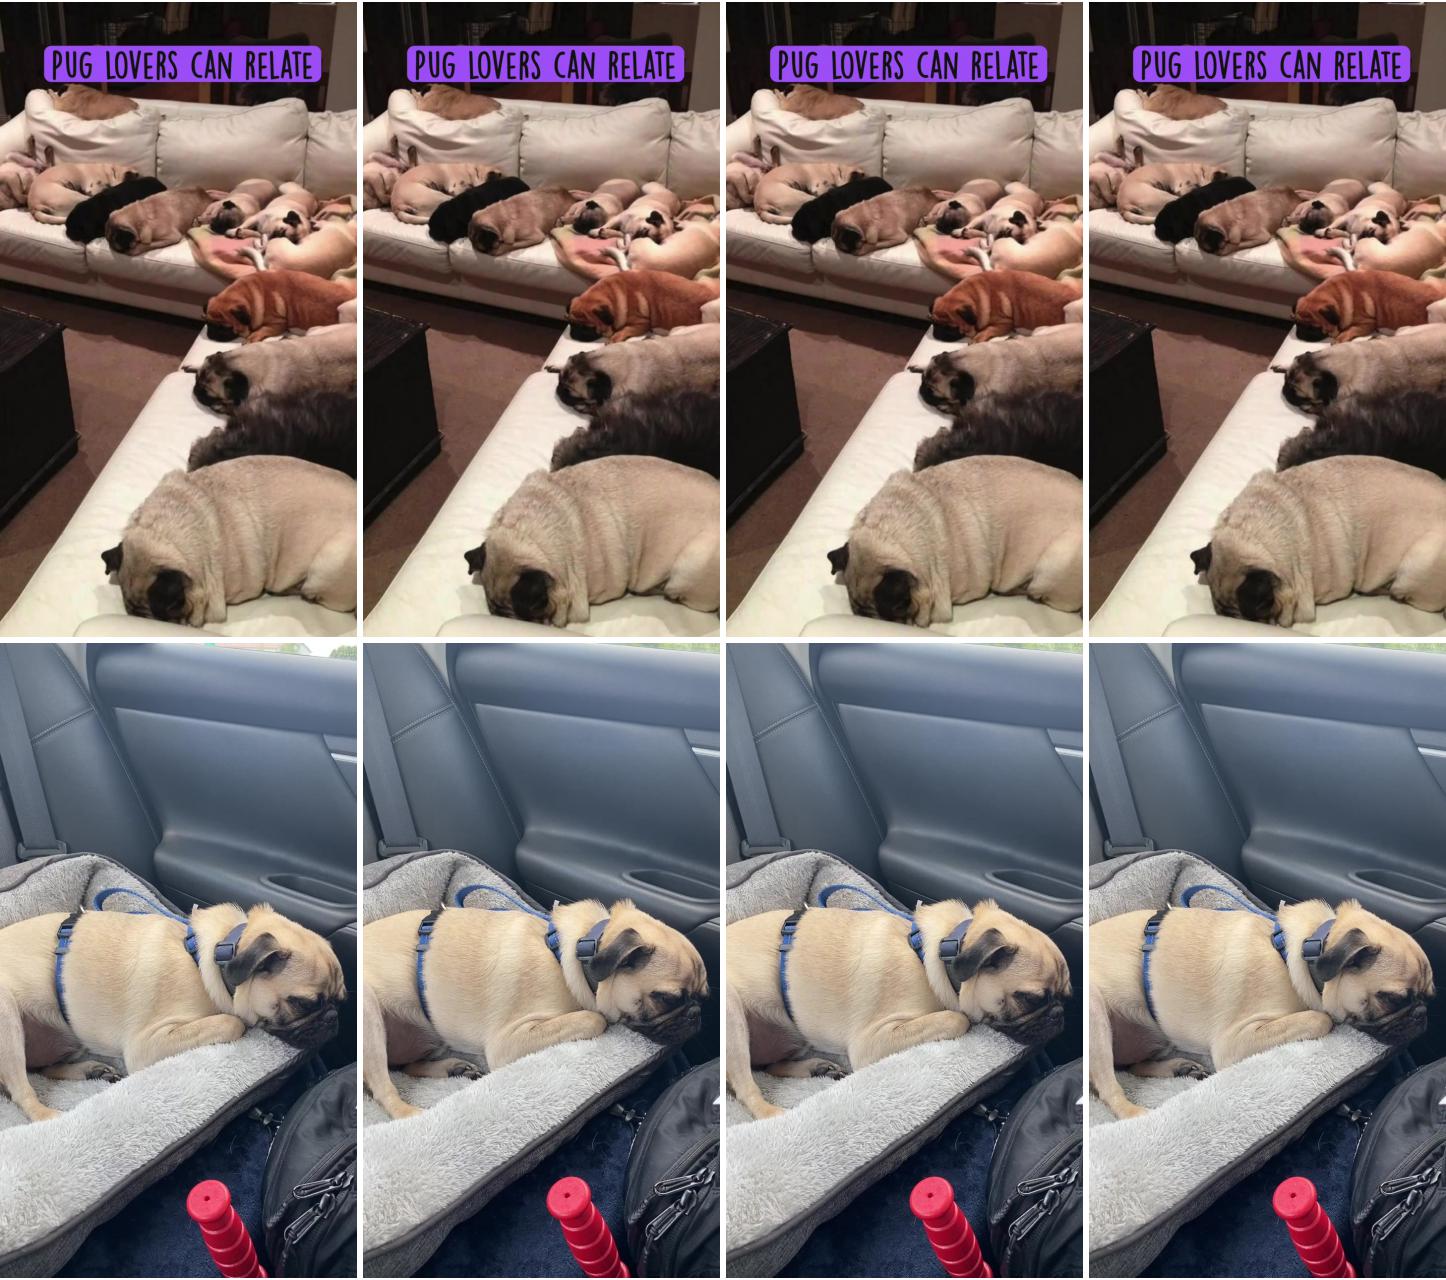 Pug lovers can relate; pug loves his sleep